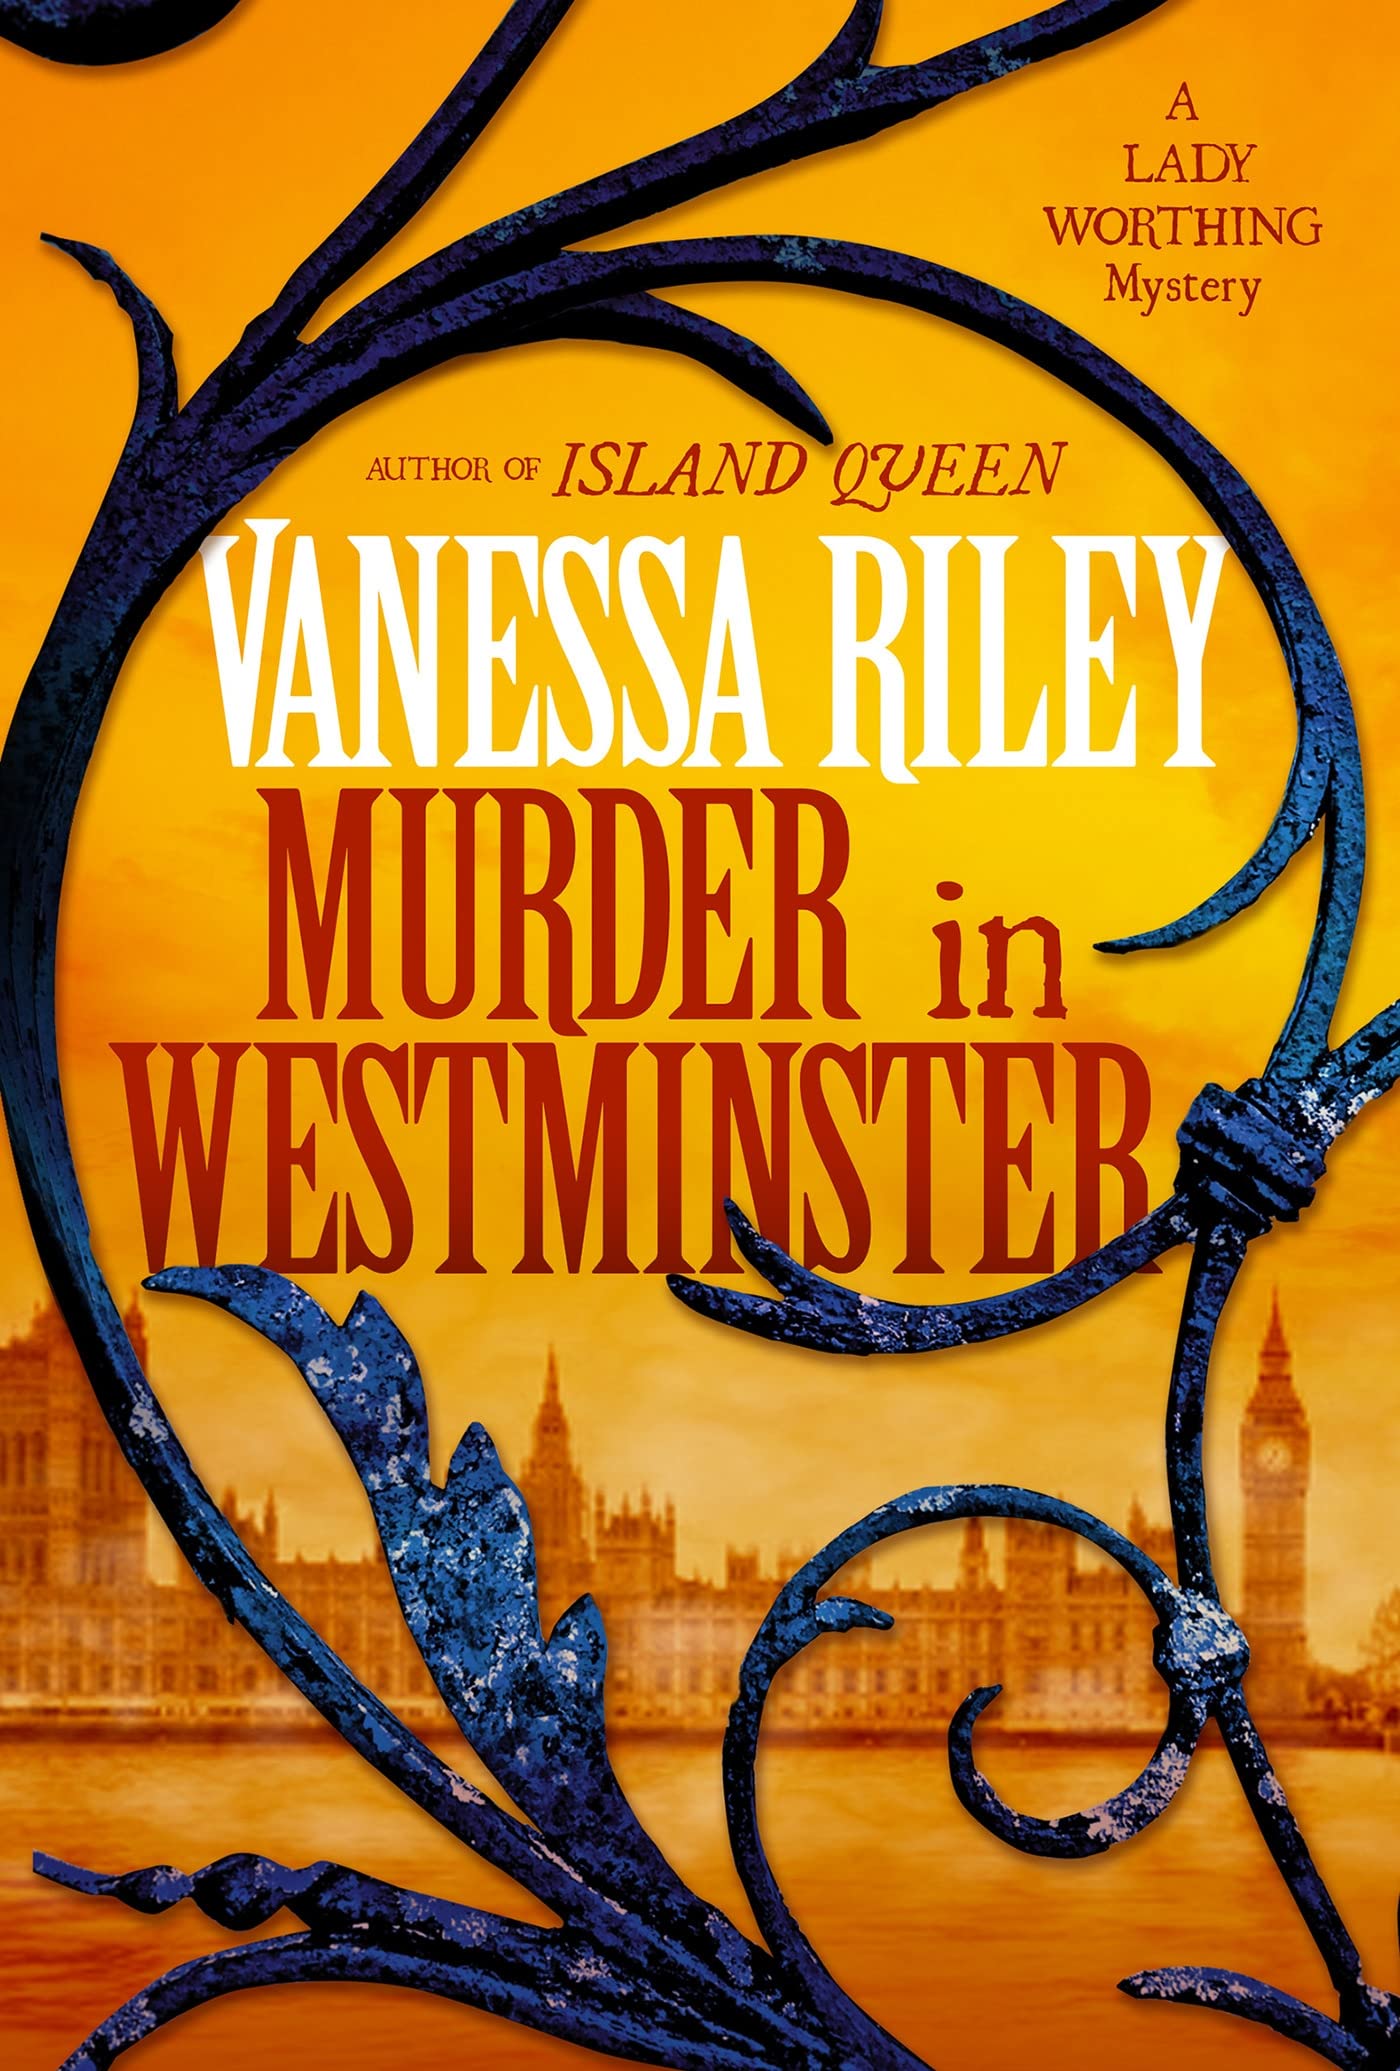 Murder in Westminster